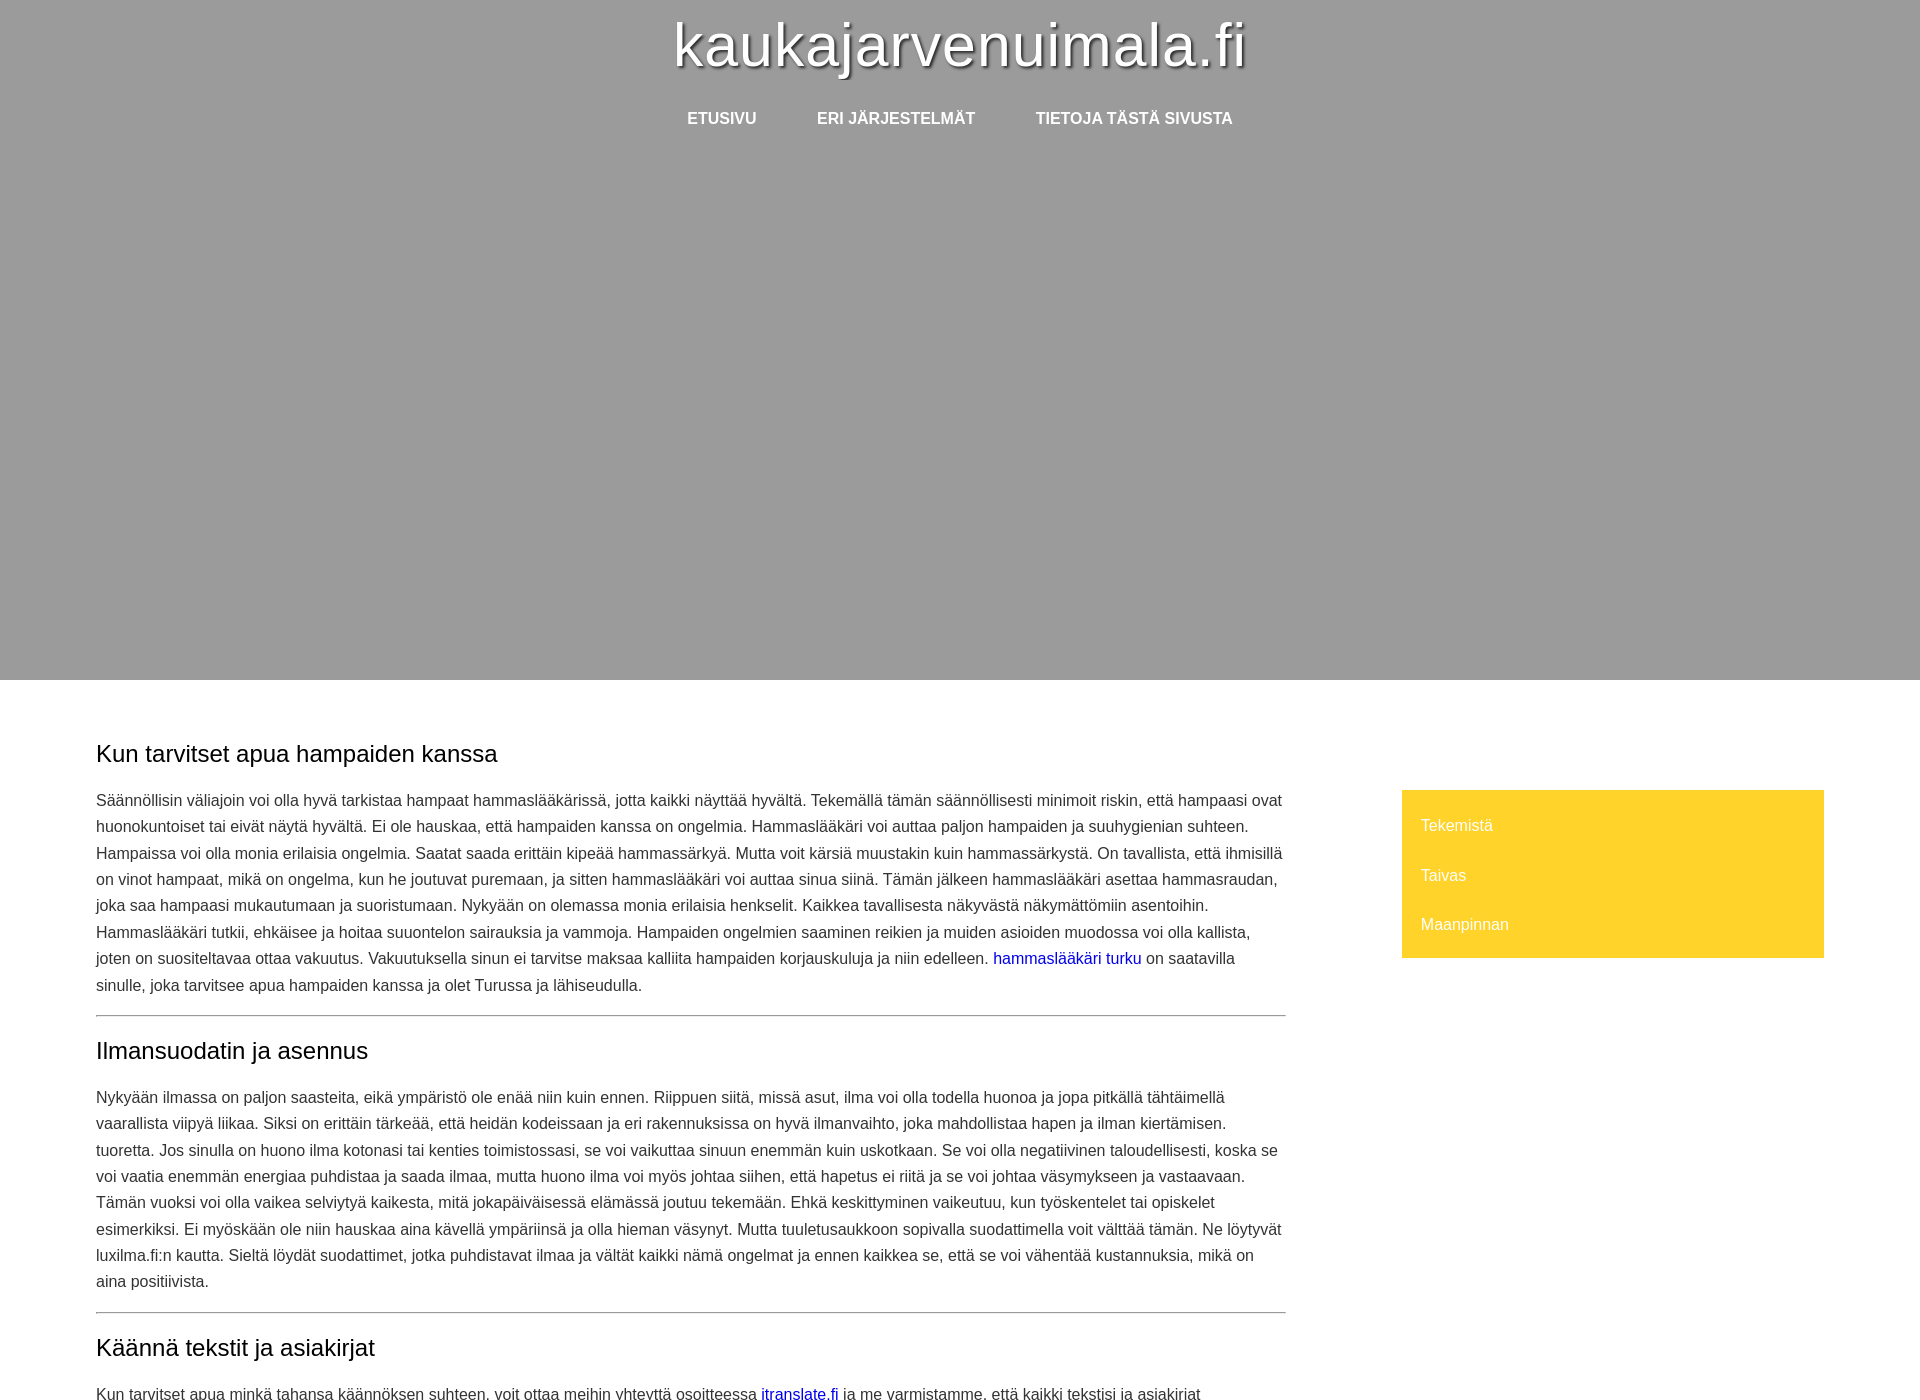 Näyttökuva kaukajarvenuimala.fi